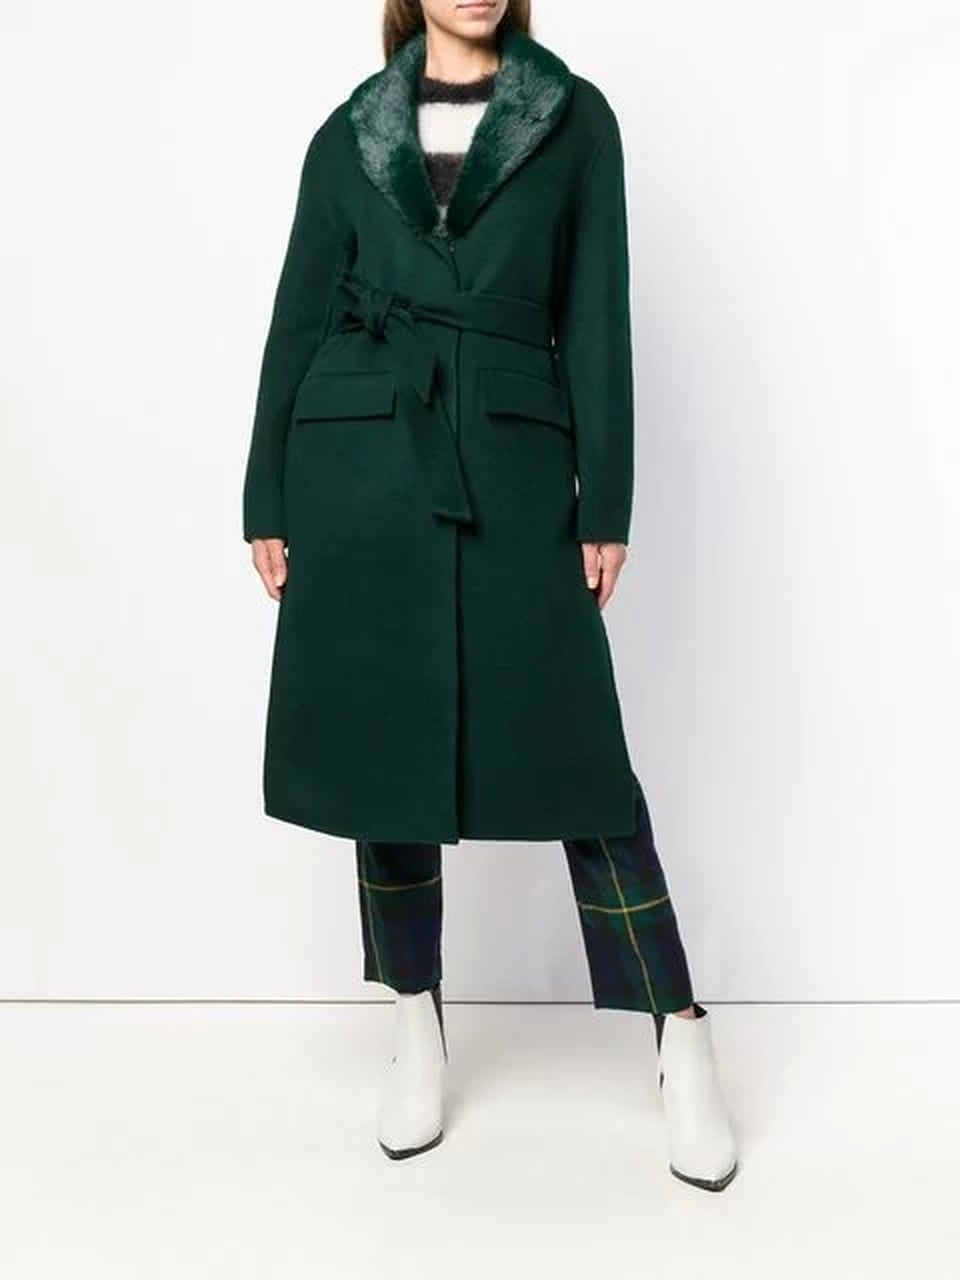 Kate Middleton's Green Coat on St. Patrick's Day 2019 | POPSUGAR Fashion